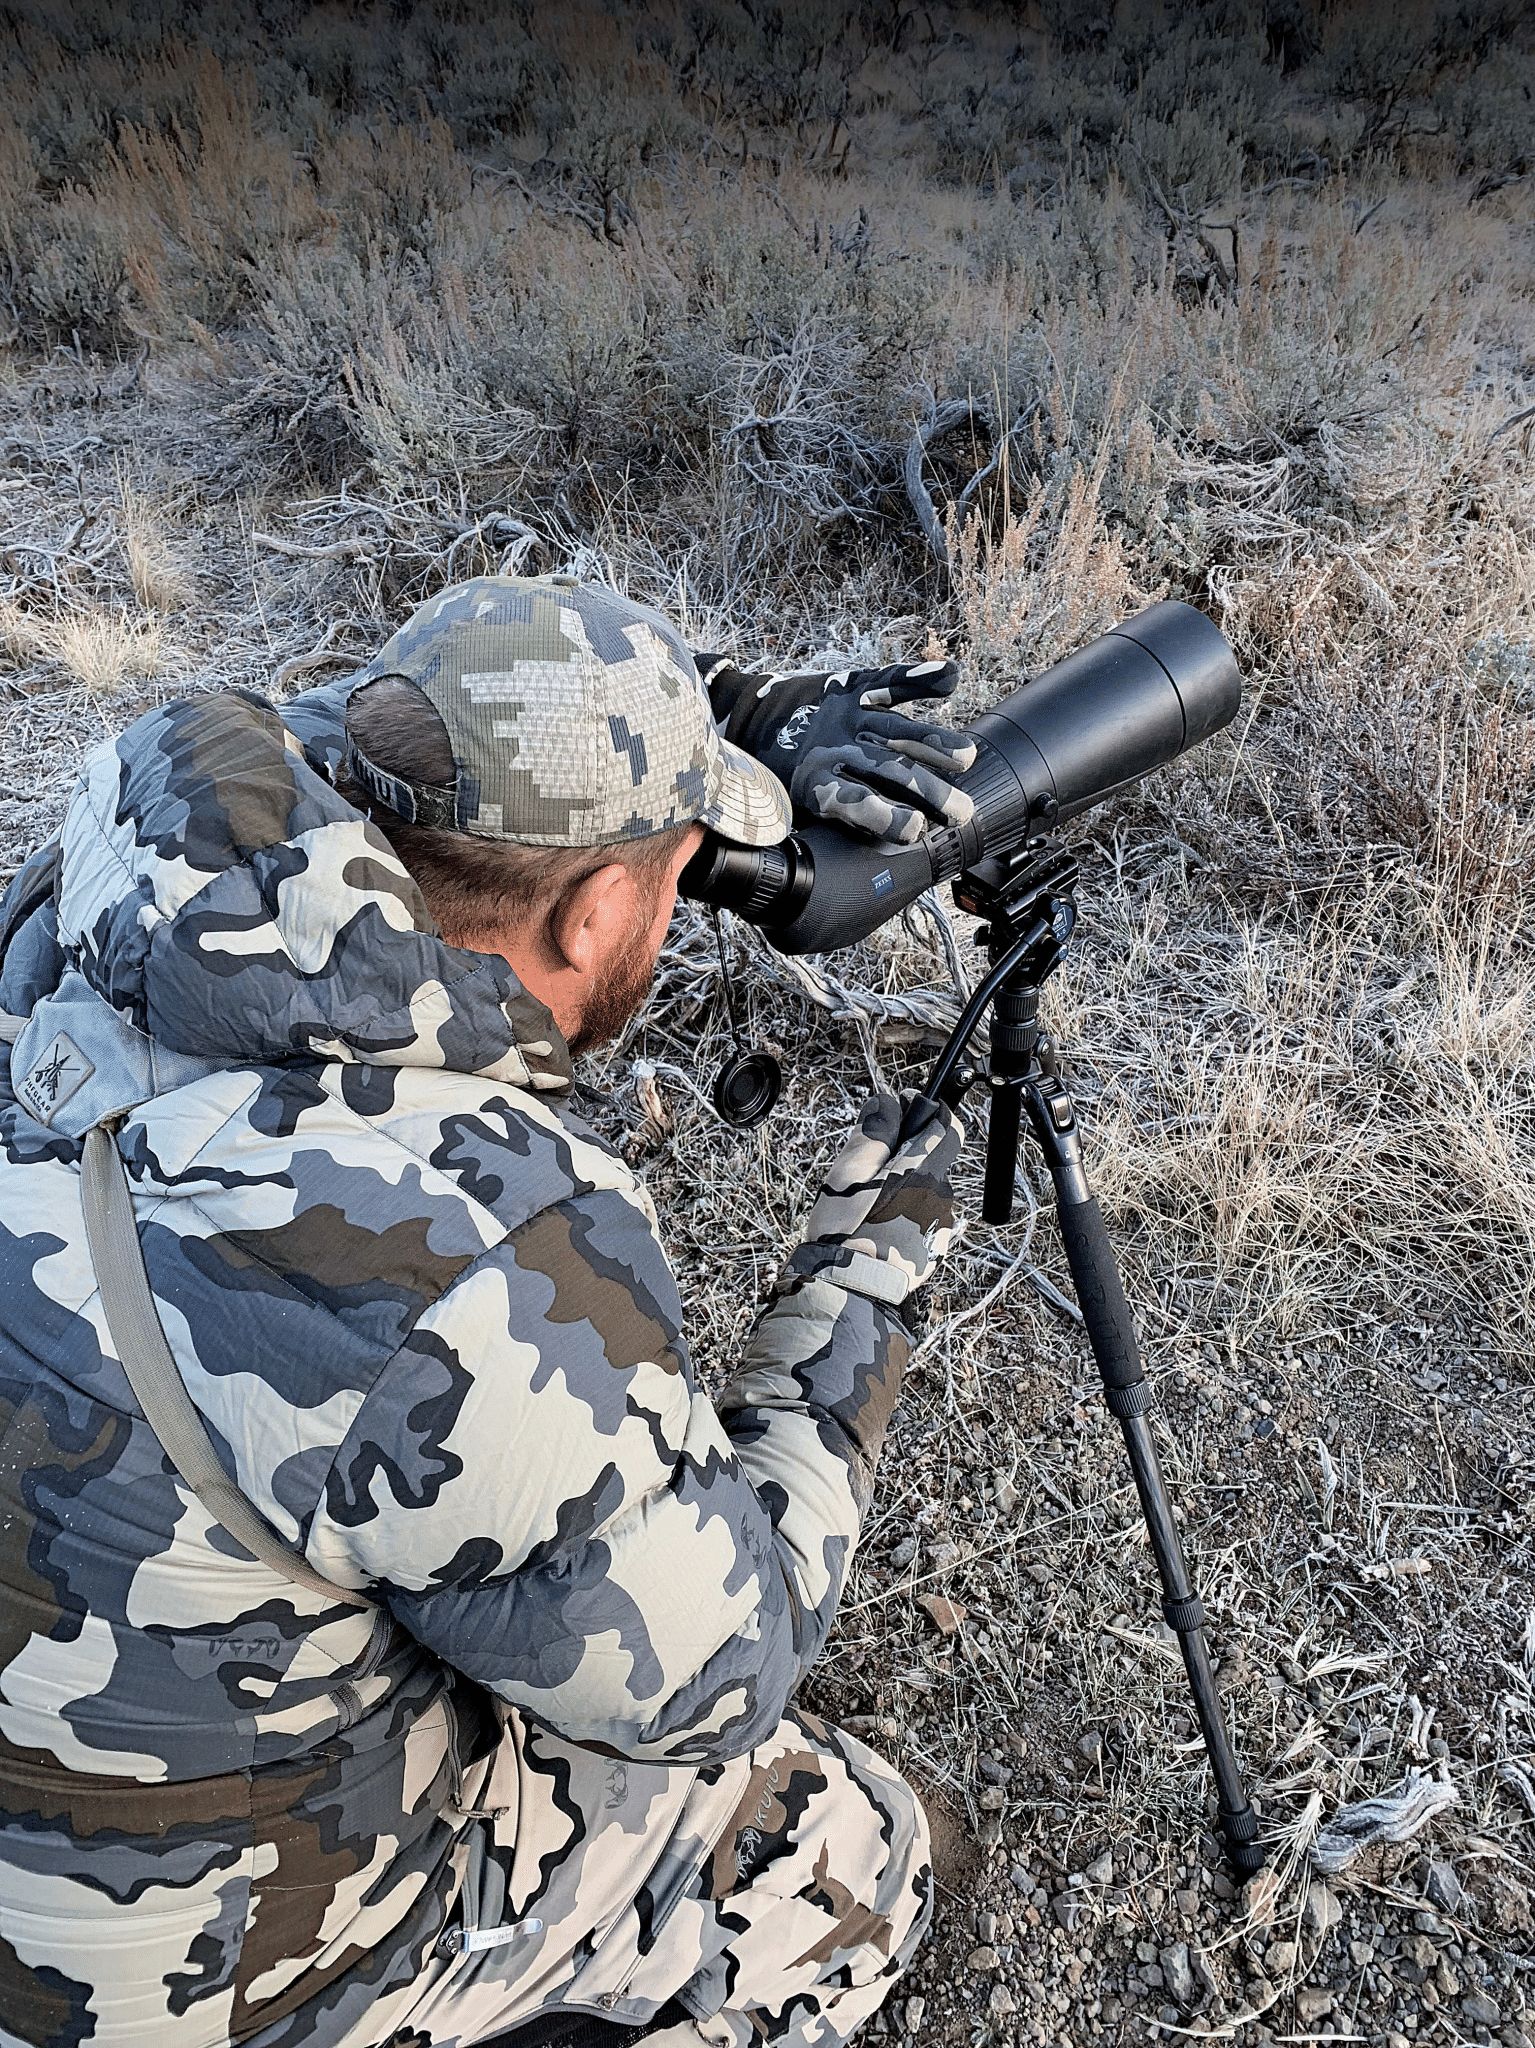 Zeiss Spotting Scopes Comparison - Western Hunter